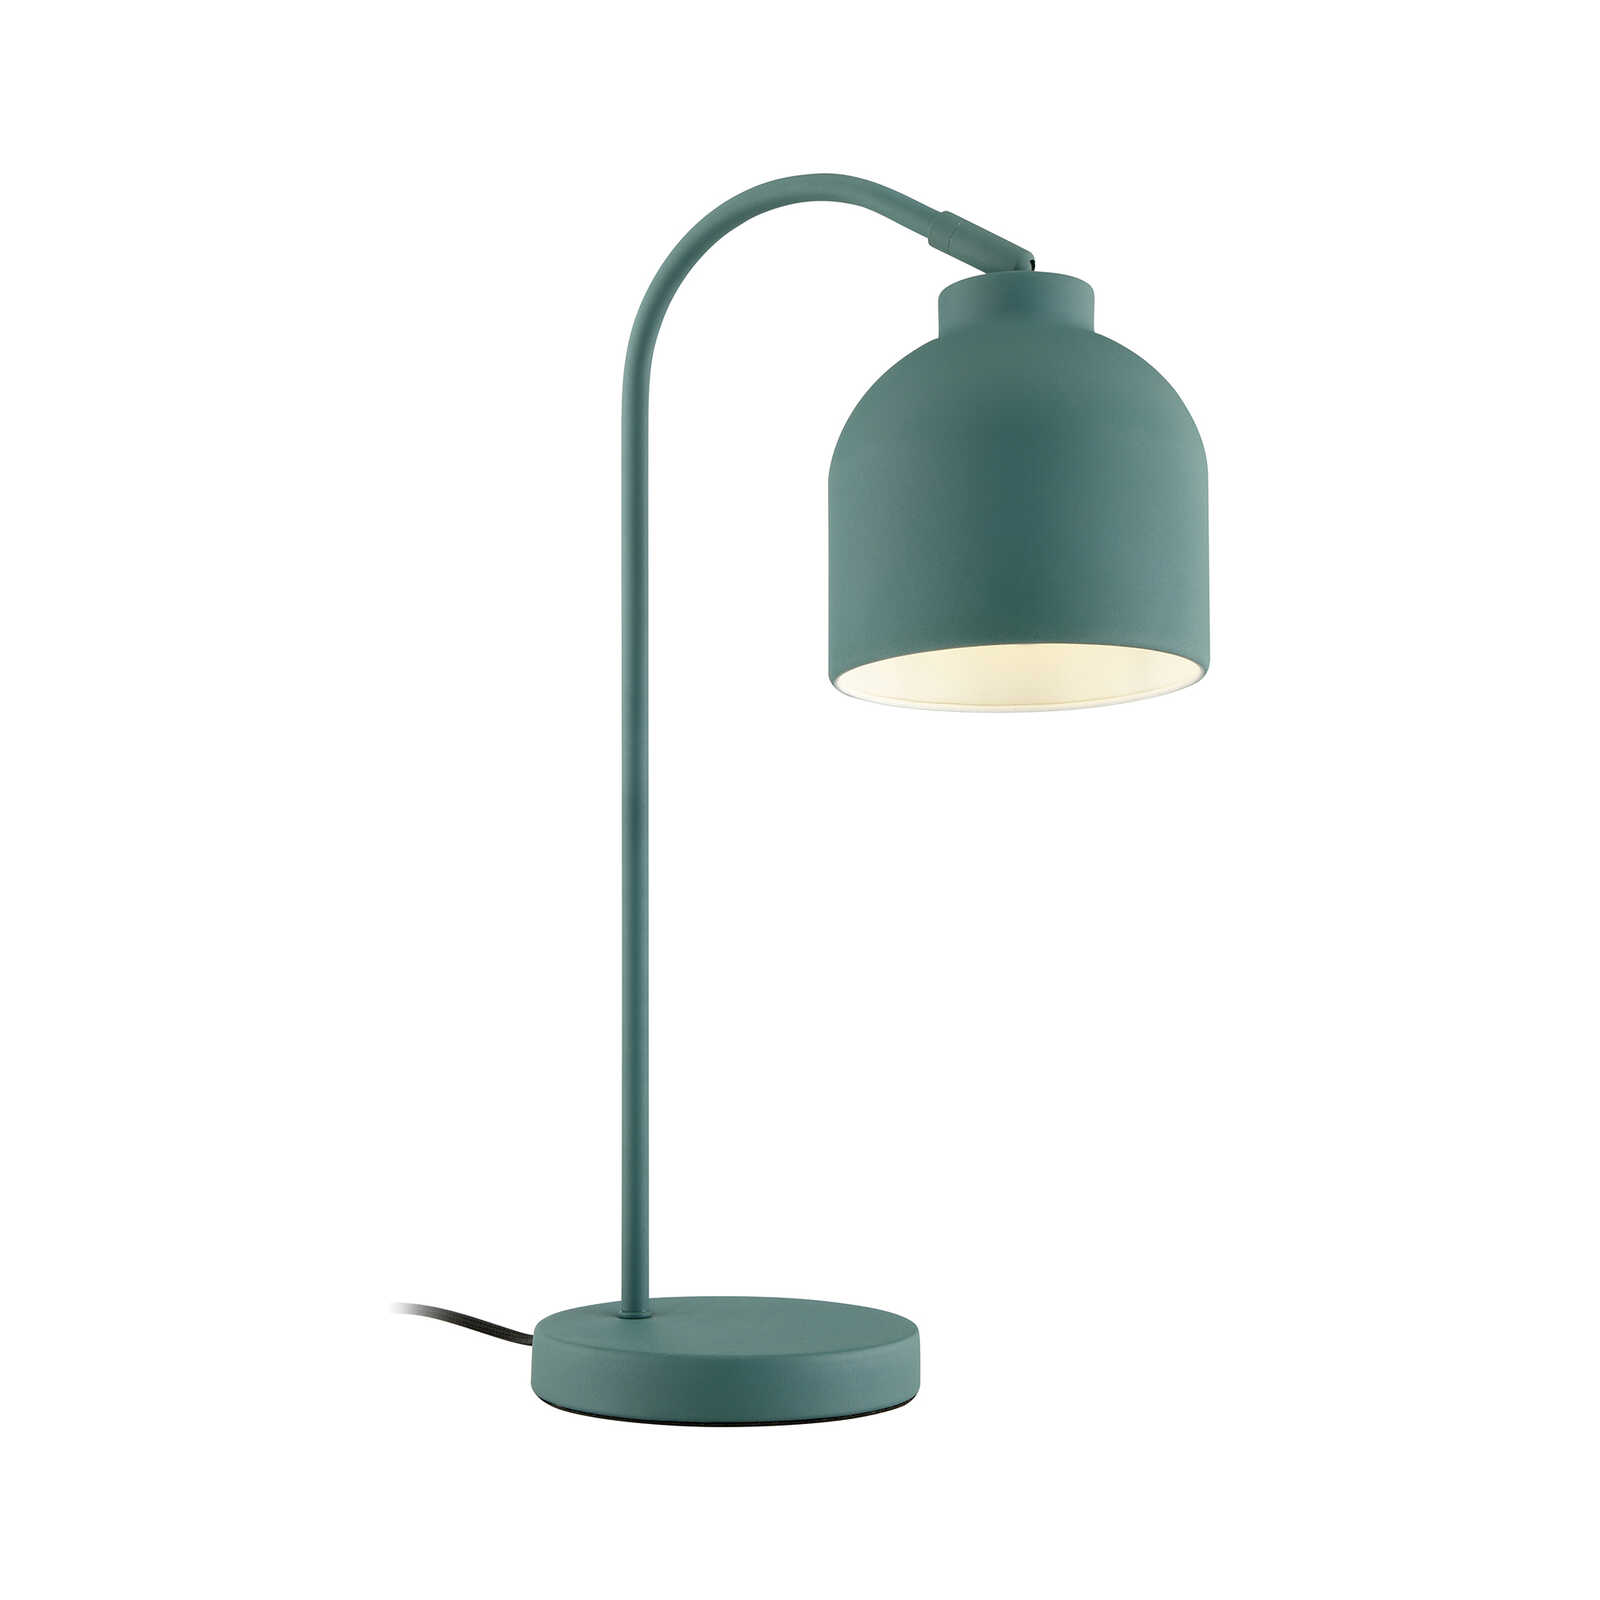 Metalen tafellamp - Patrick 2 - Groen
